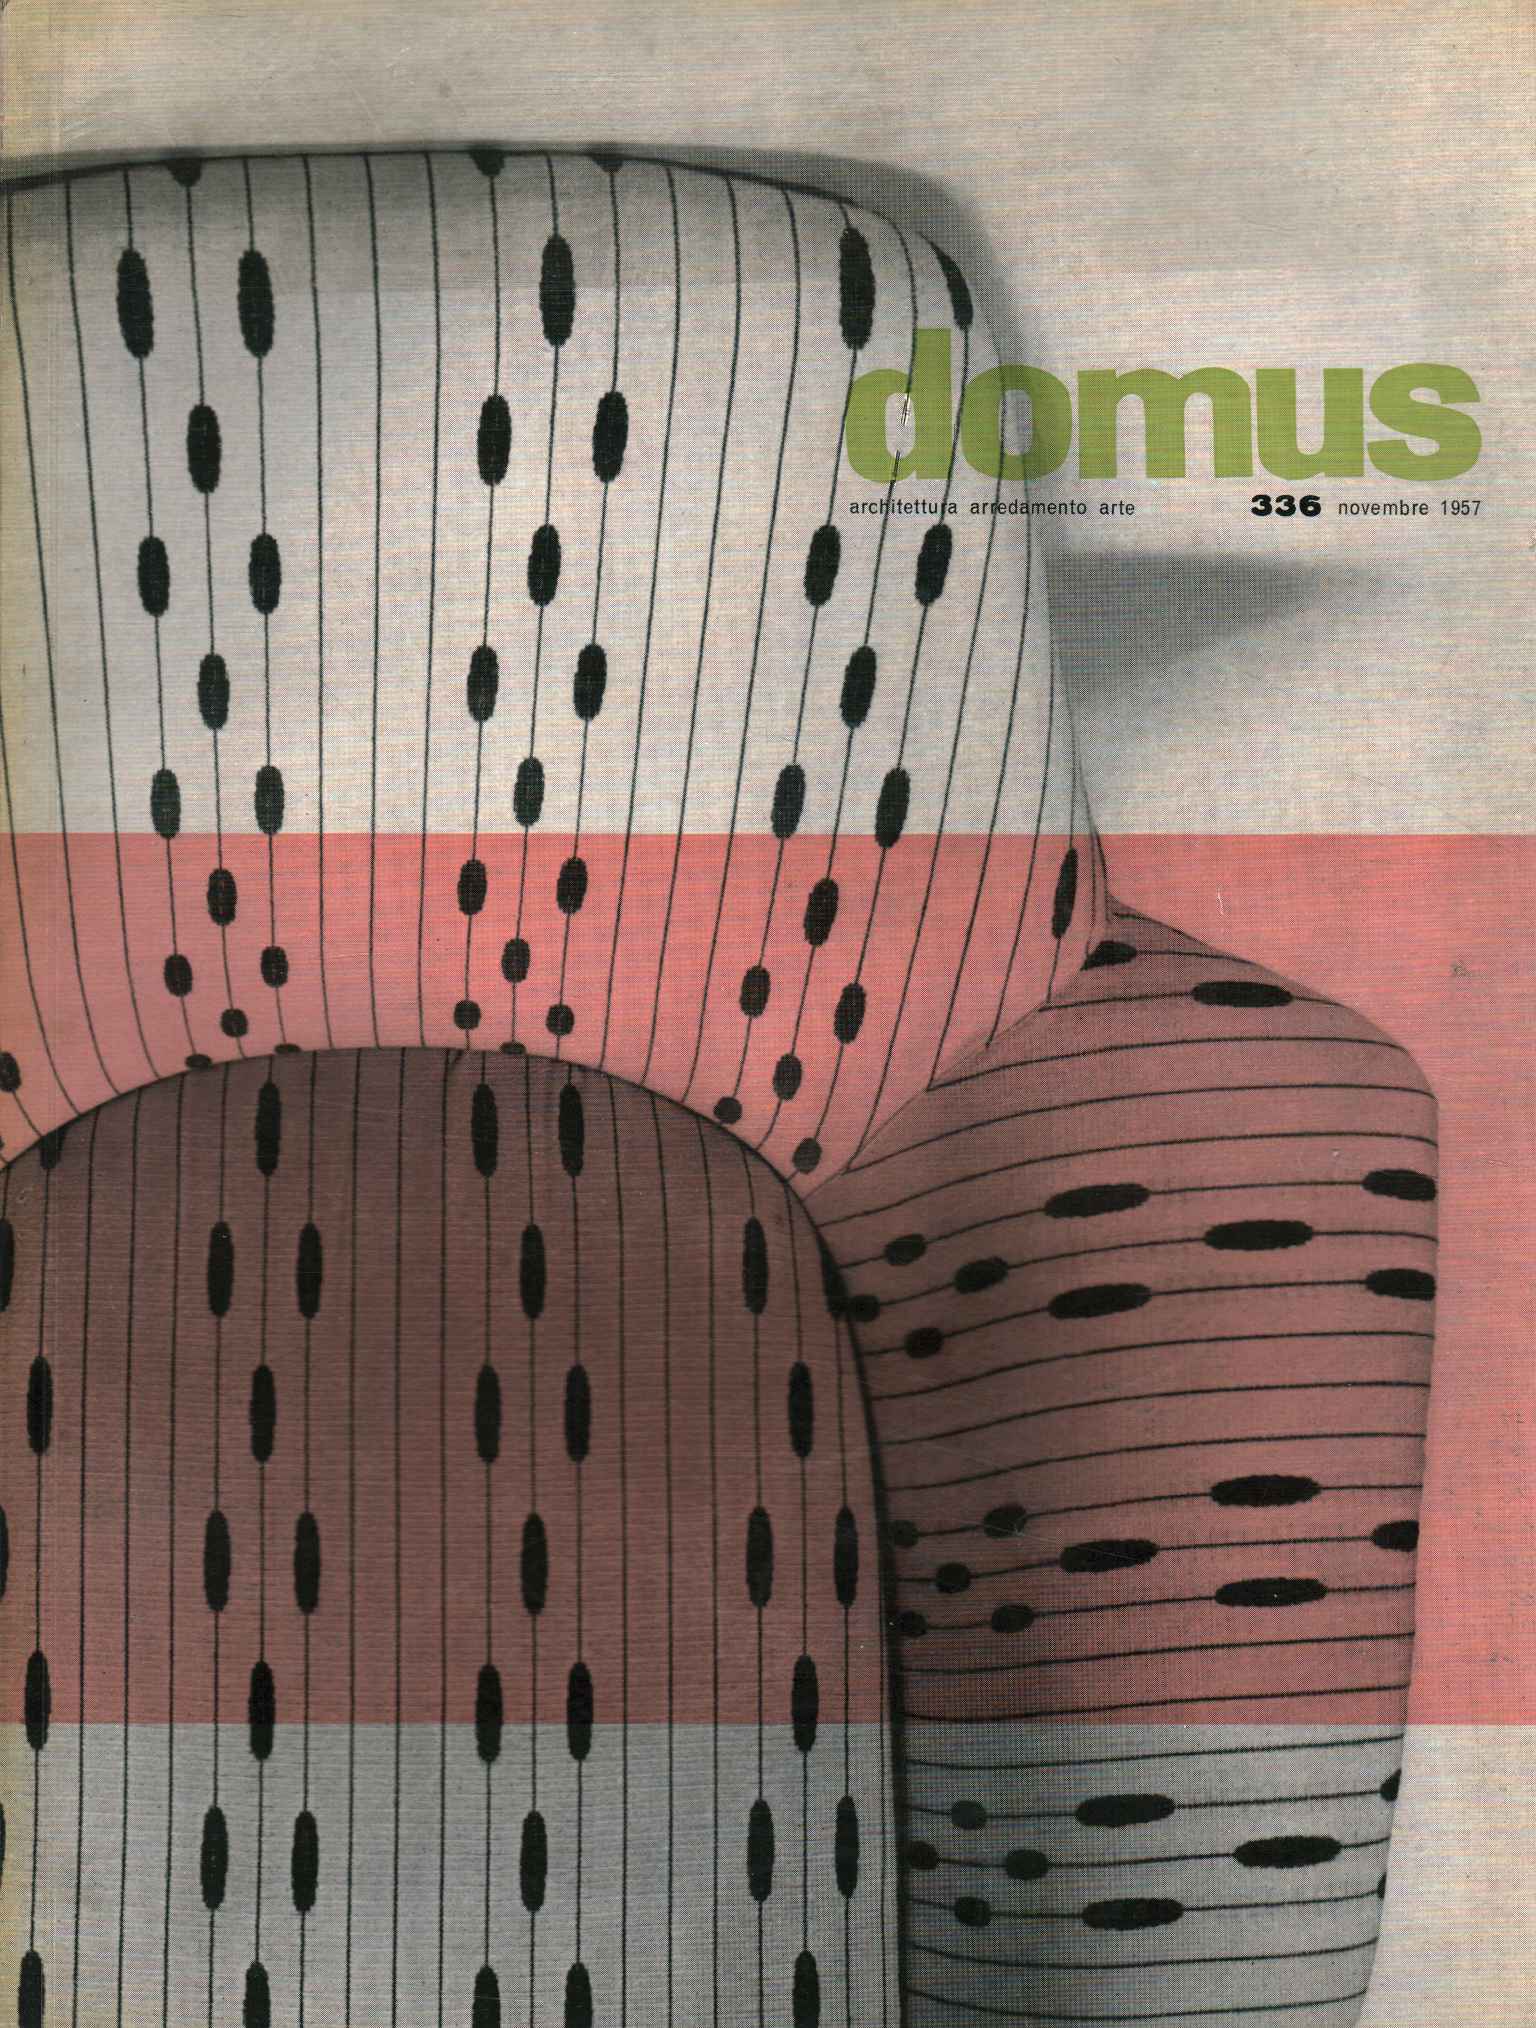 Domus. Architecture, furniture, art (nine